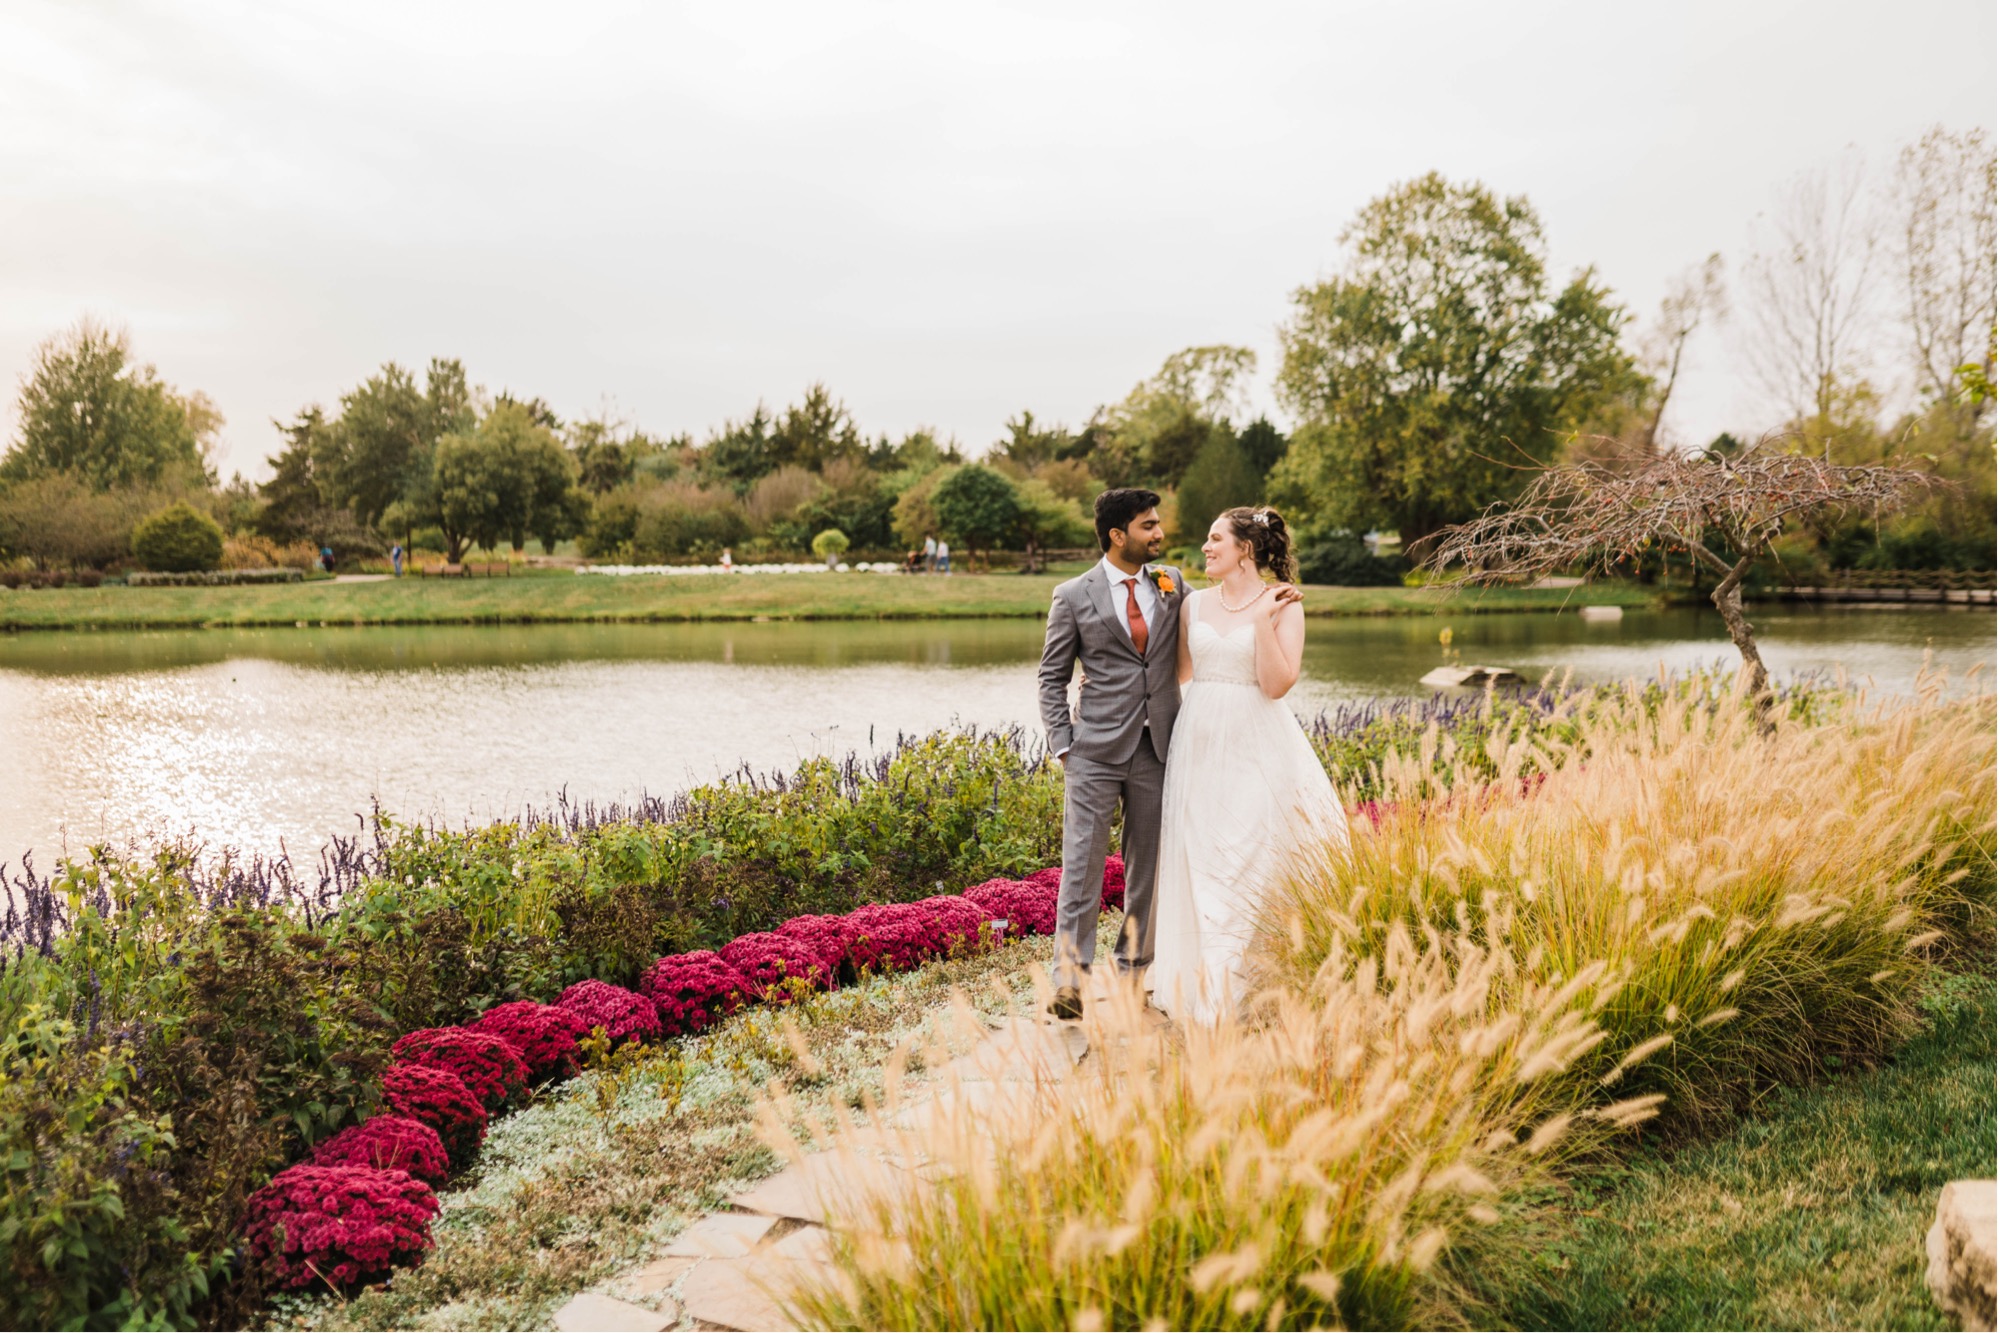 Overland Park Arboretum Wedding   Cara + Andy   Hey Tay